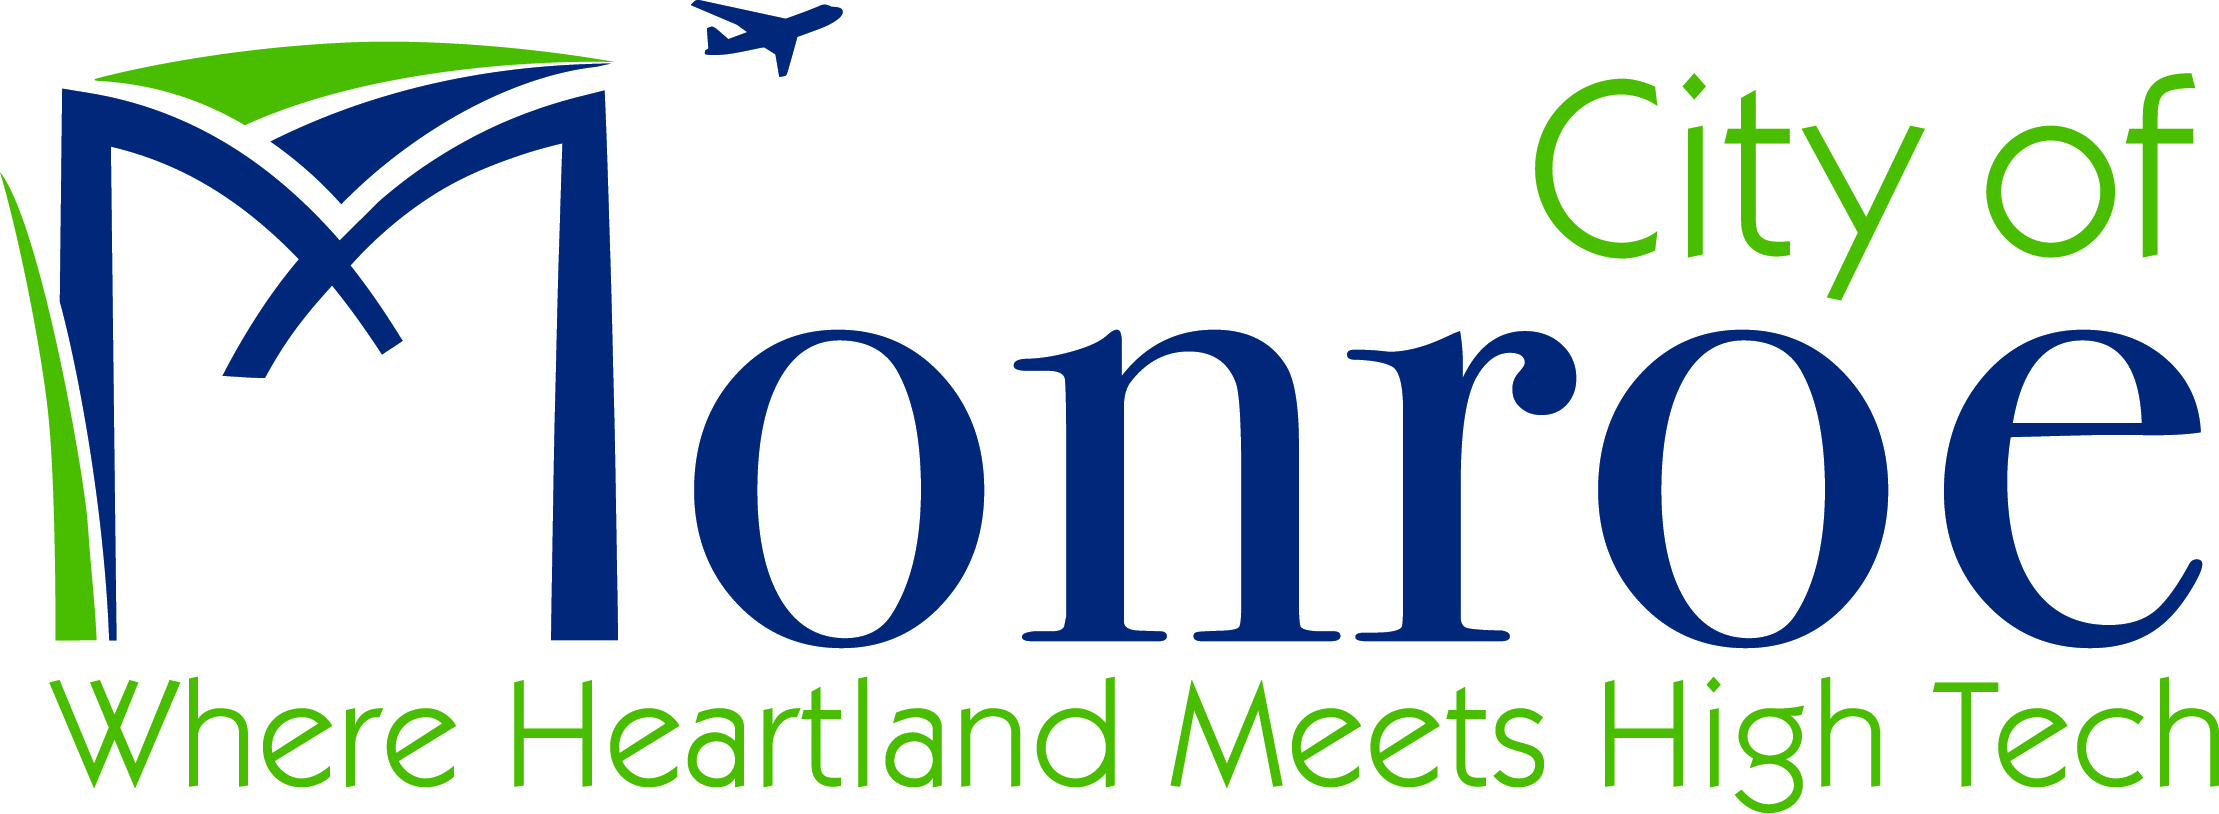 logo for the City of Monroe in North Carolina, Where Heartland Meets High Tech